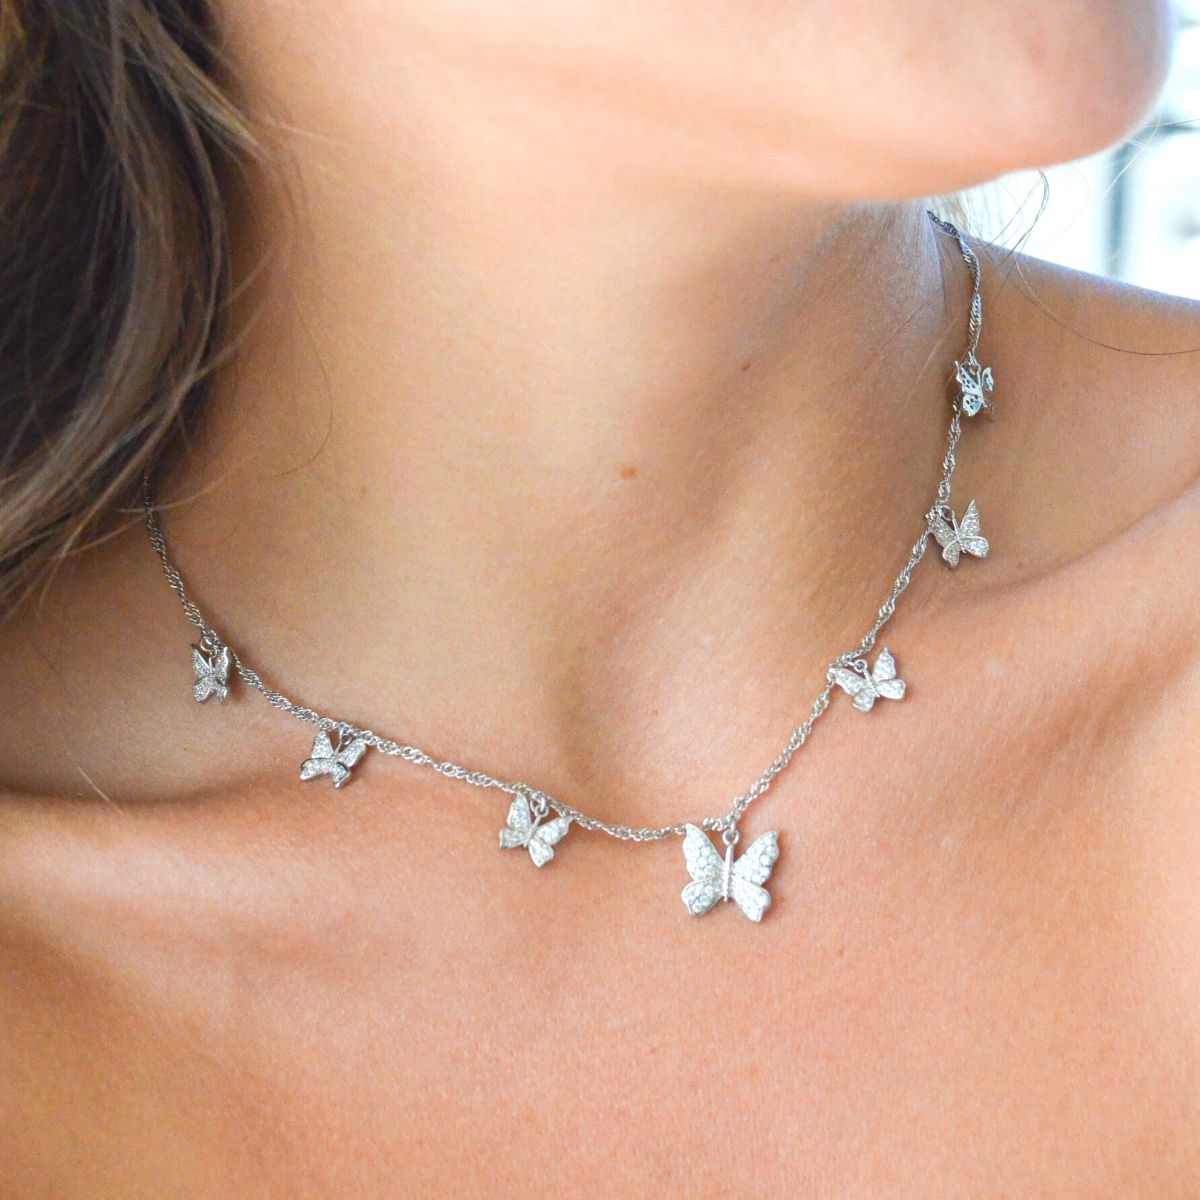 BUY 1 GET 1 FREE - Brilliant Butterfly Silver Choker Necklace + Brilliant Butterfly Silver Mini Hoop Earrings